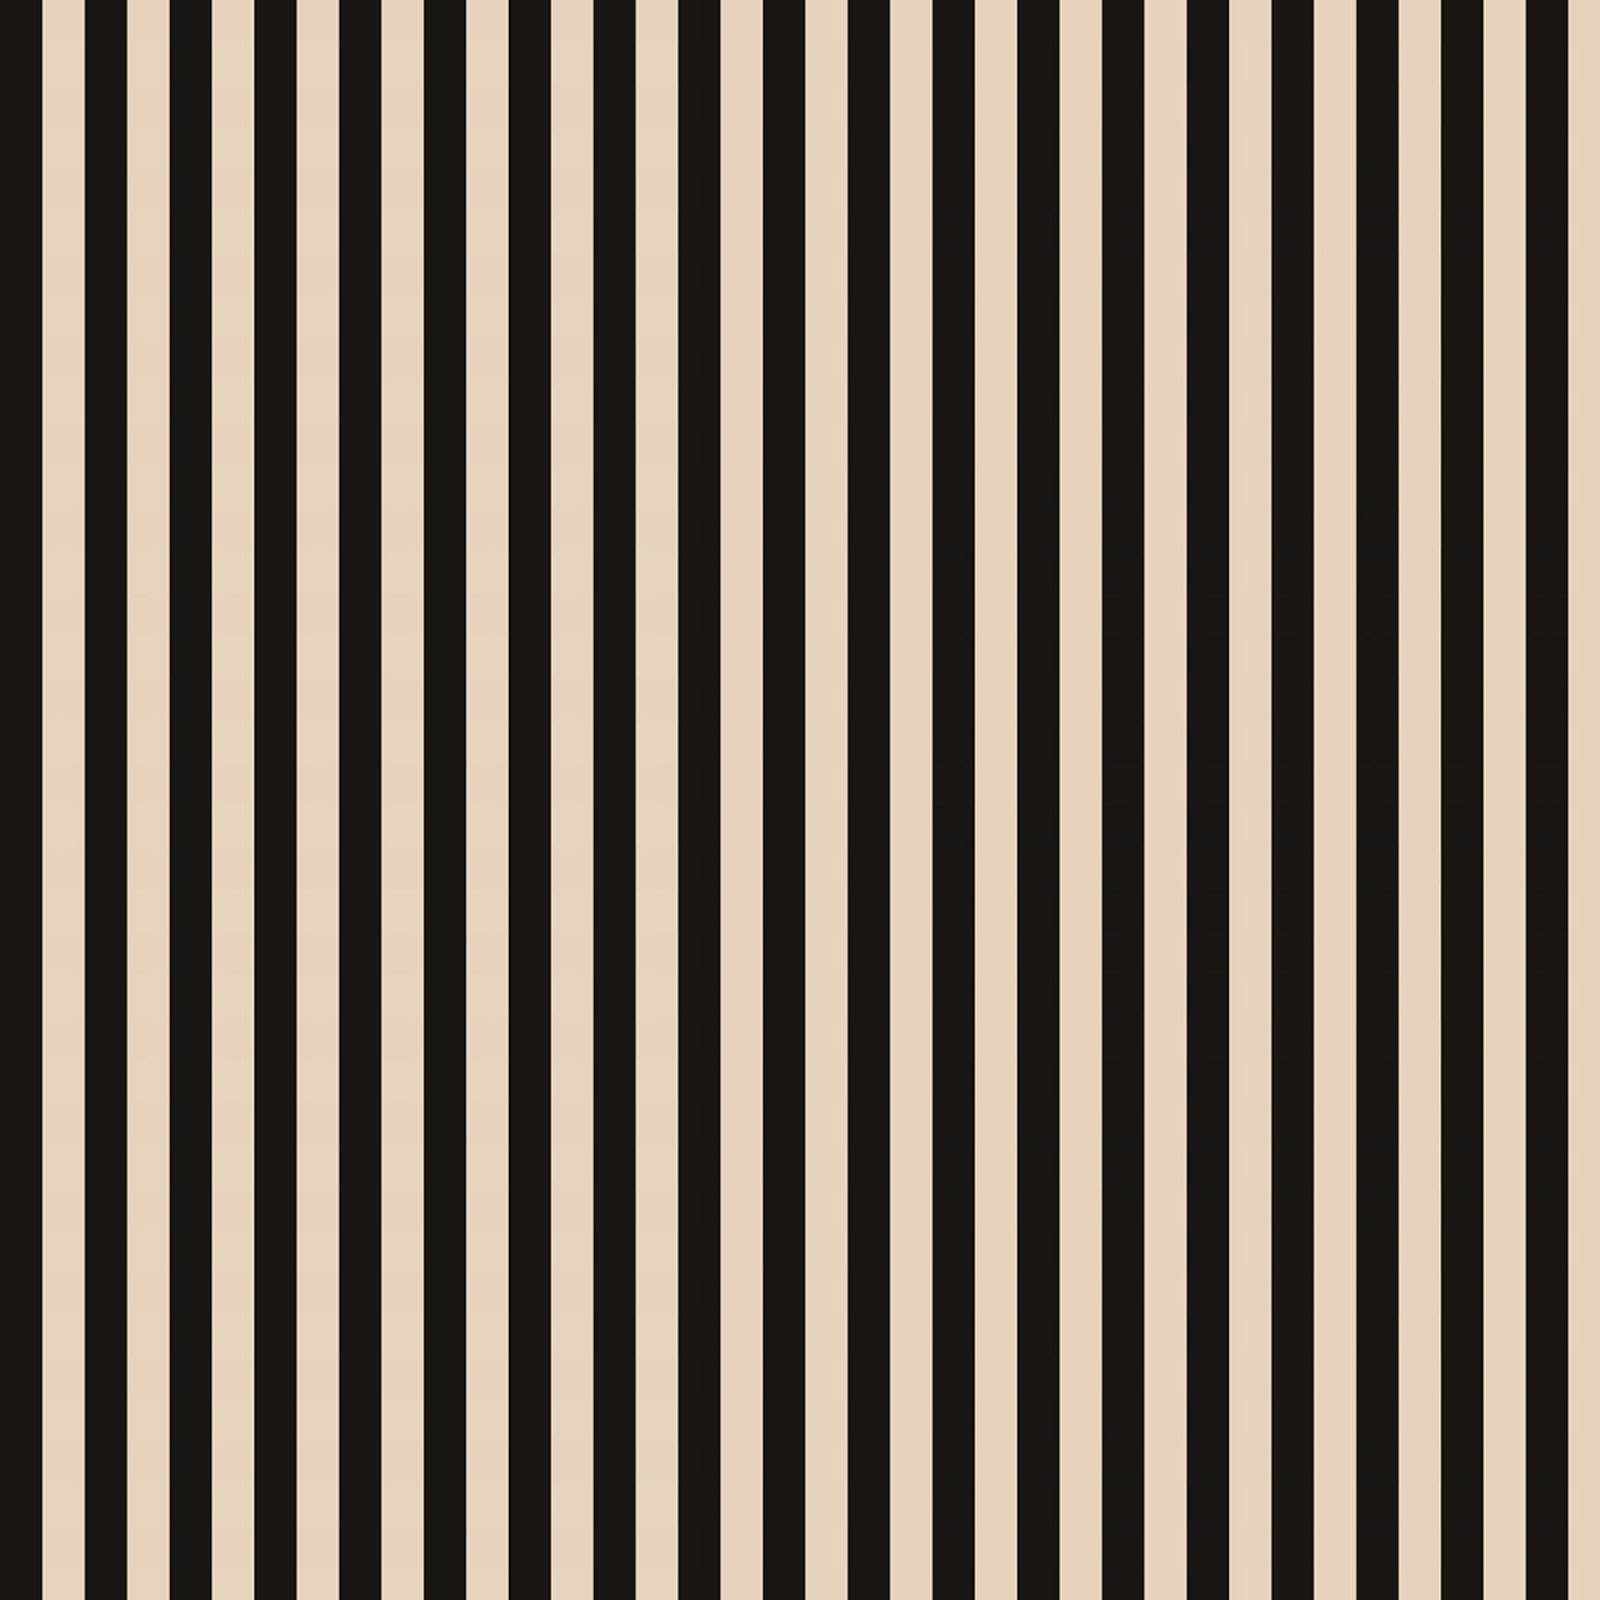 Stampin D'Amour: Free Digital Scrapbook Paper - Black and Cream Stripes